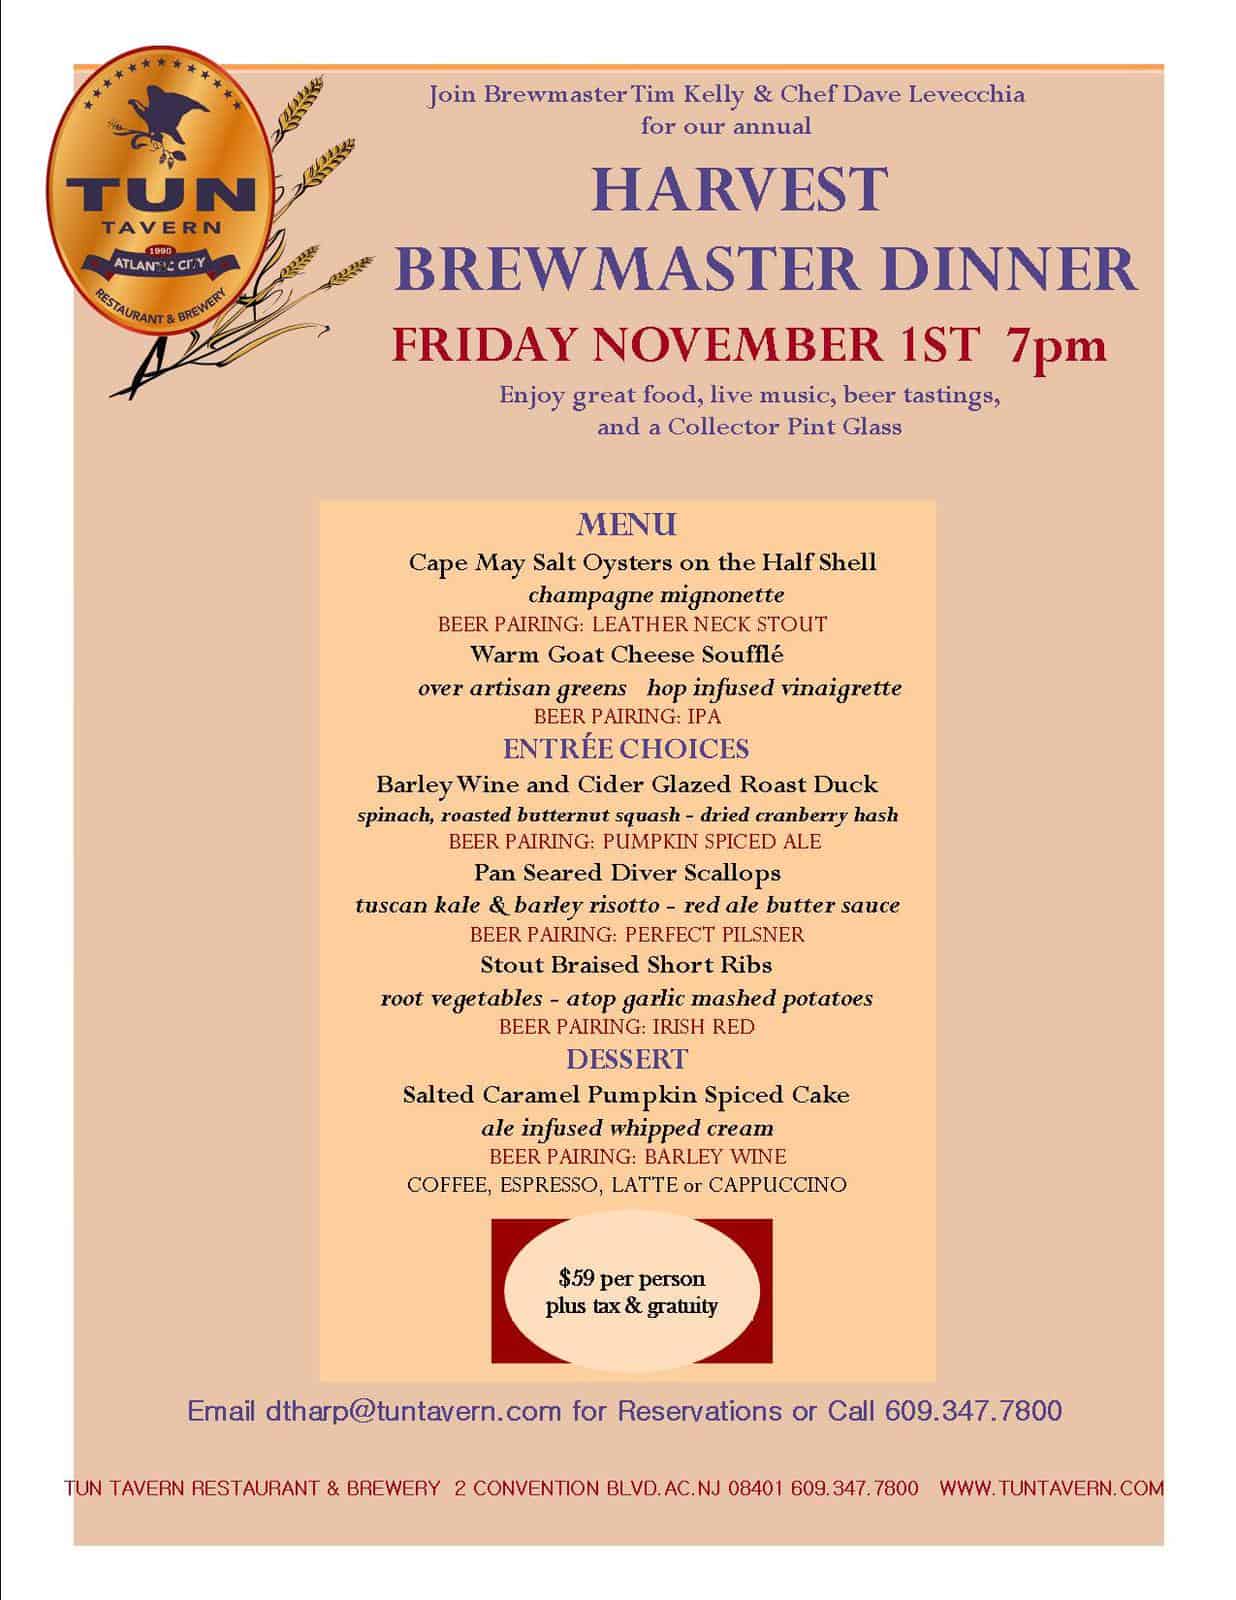 Tun Tavern Brewmaster Dinner 2013